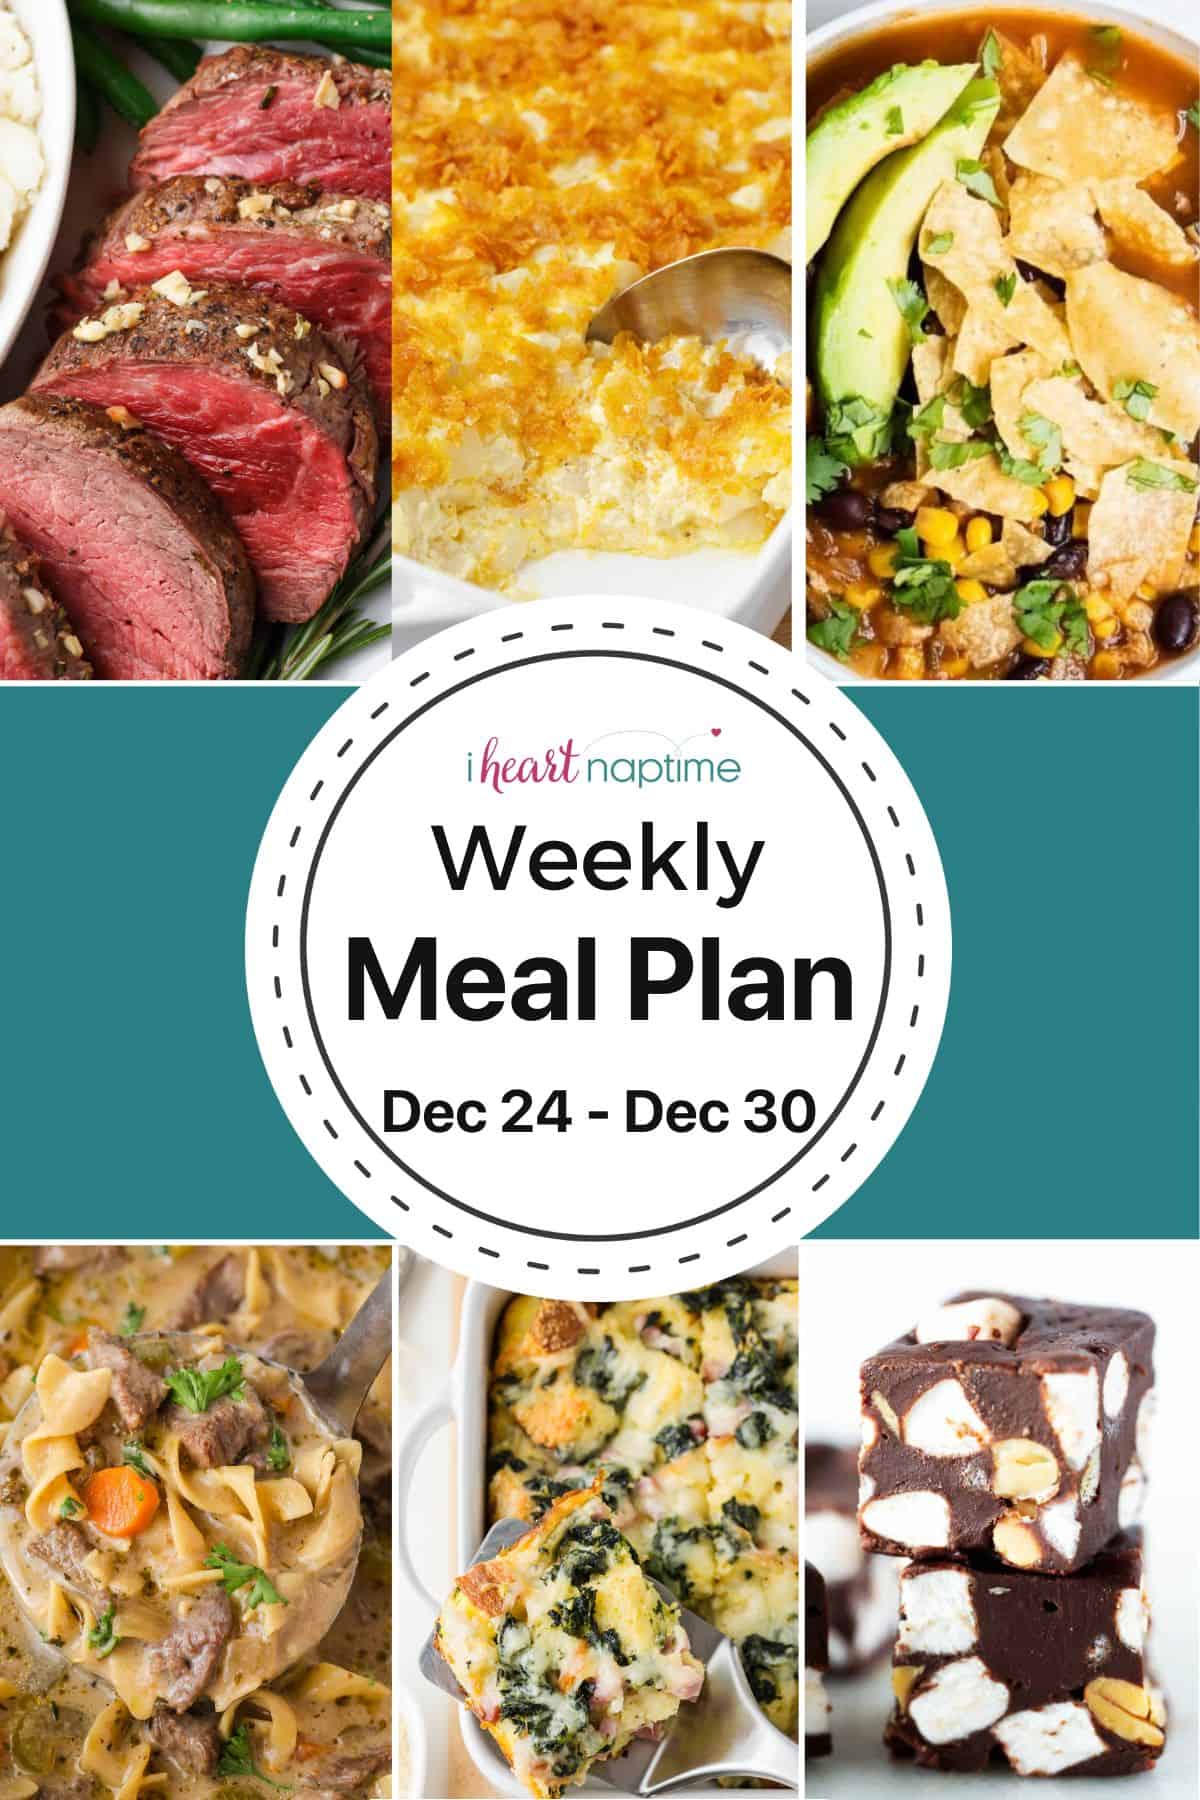 Meal Plan week of December 24 for I Heart Naptime.